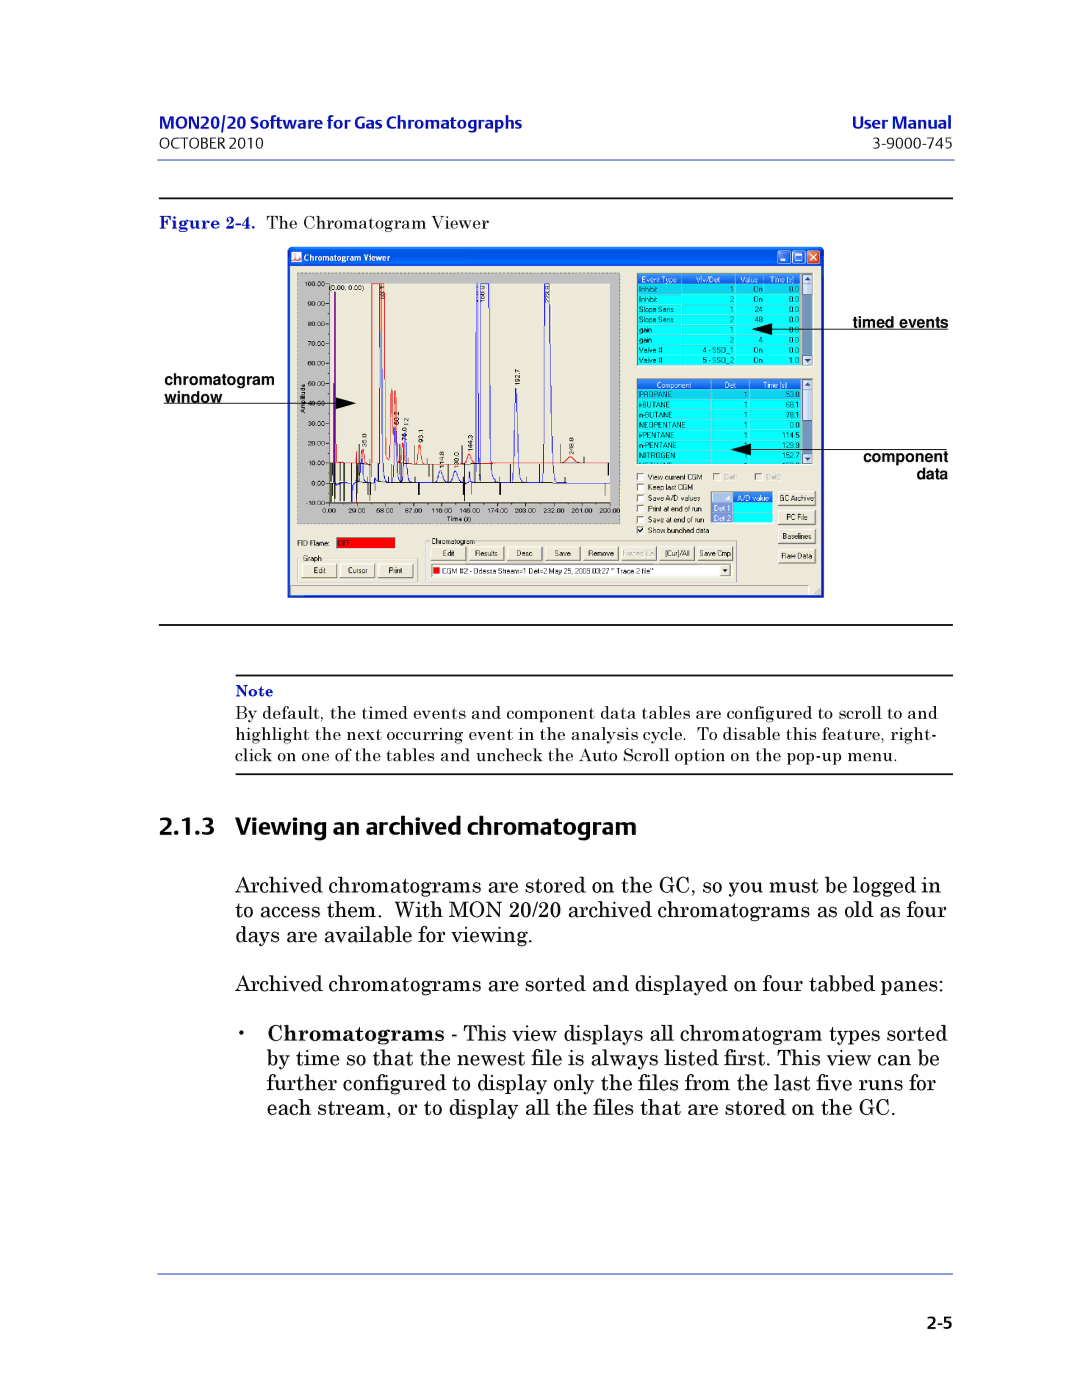 Emerson Process Management 3-9000-745 manual Viewing an archived chromatogram, Chromatogram Viewer 